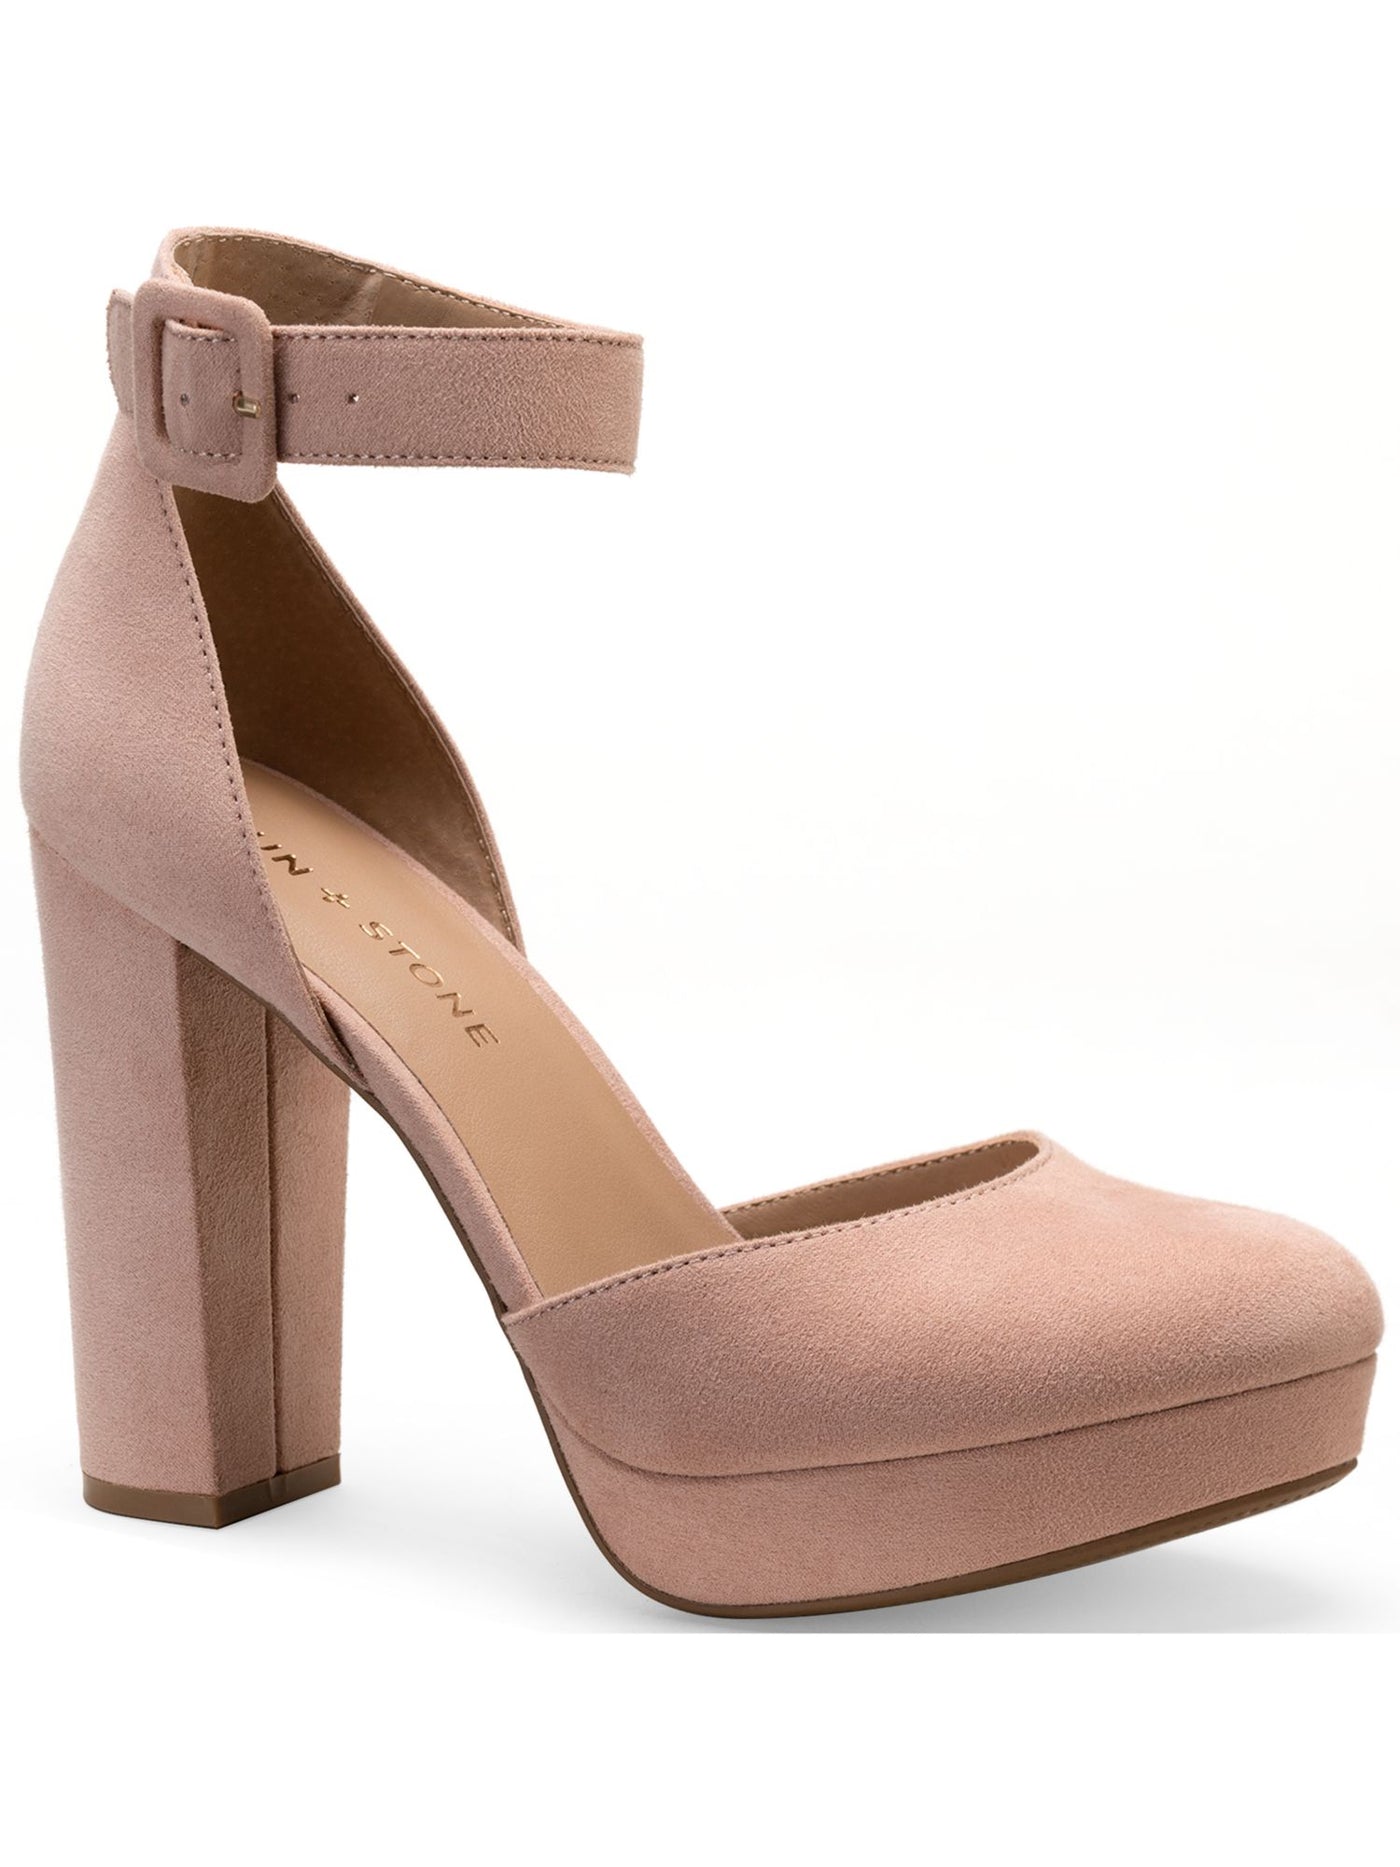 SUN STONE Womens Pink 1" Platform Padded Adjustable Ankle Strap Estrella Round Toe Block Heel Buckle Pumps Shoes 8.5 W